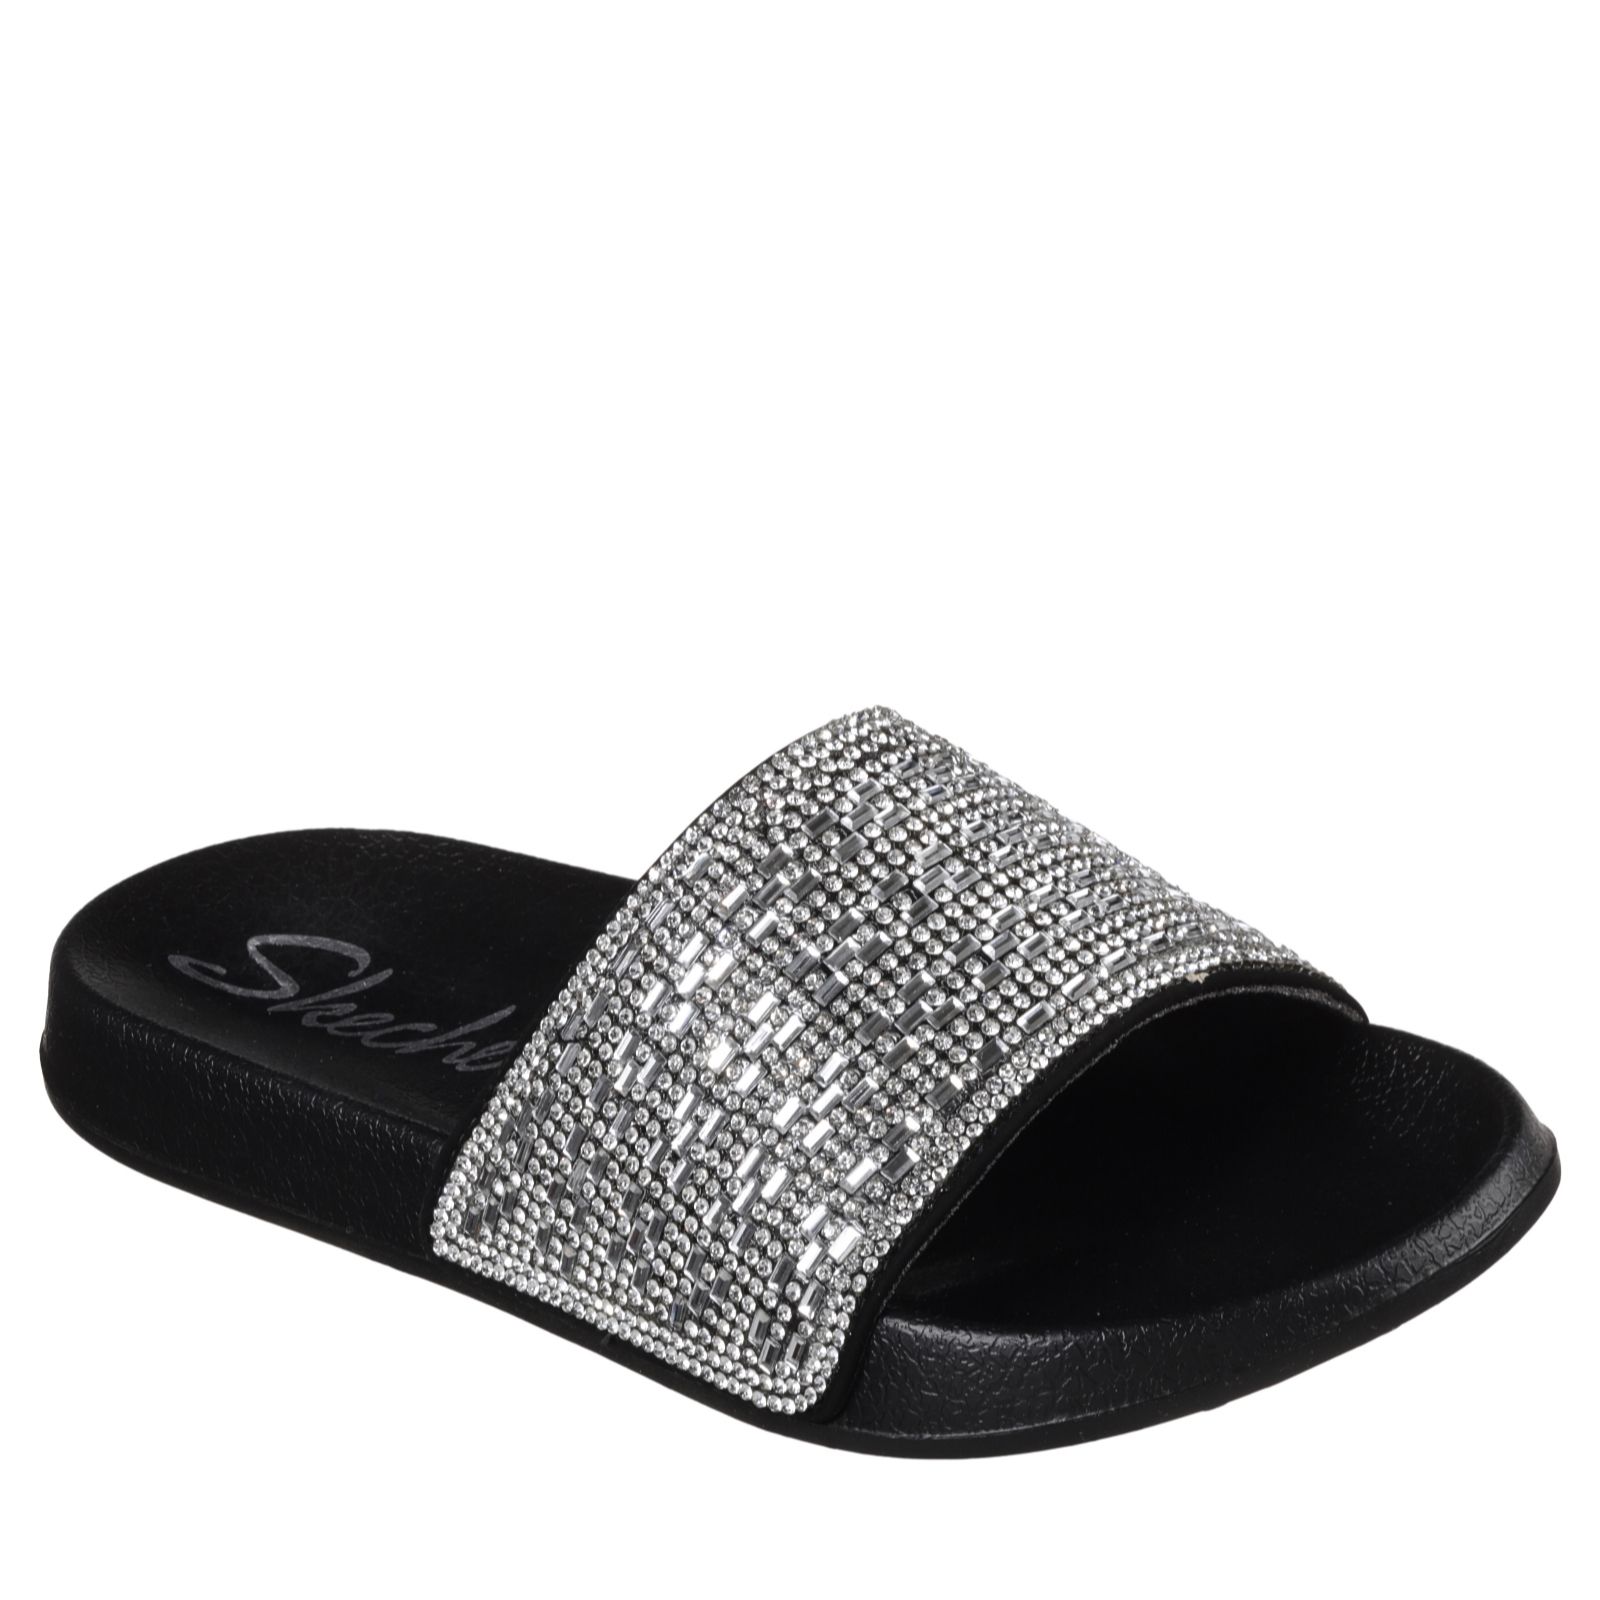 skechers 2nd take summer chic rhinestone slide sandal